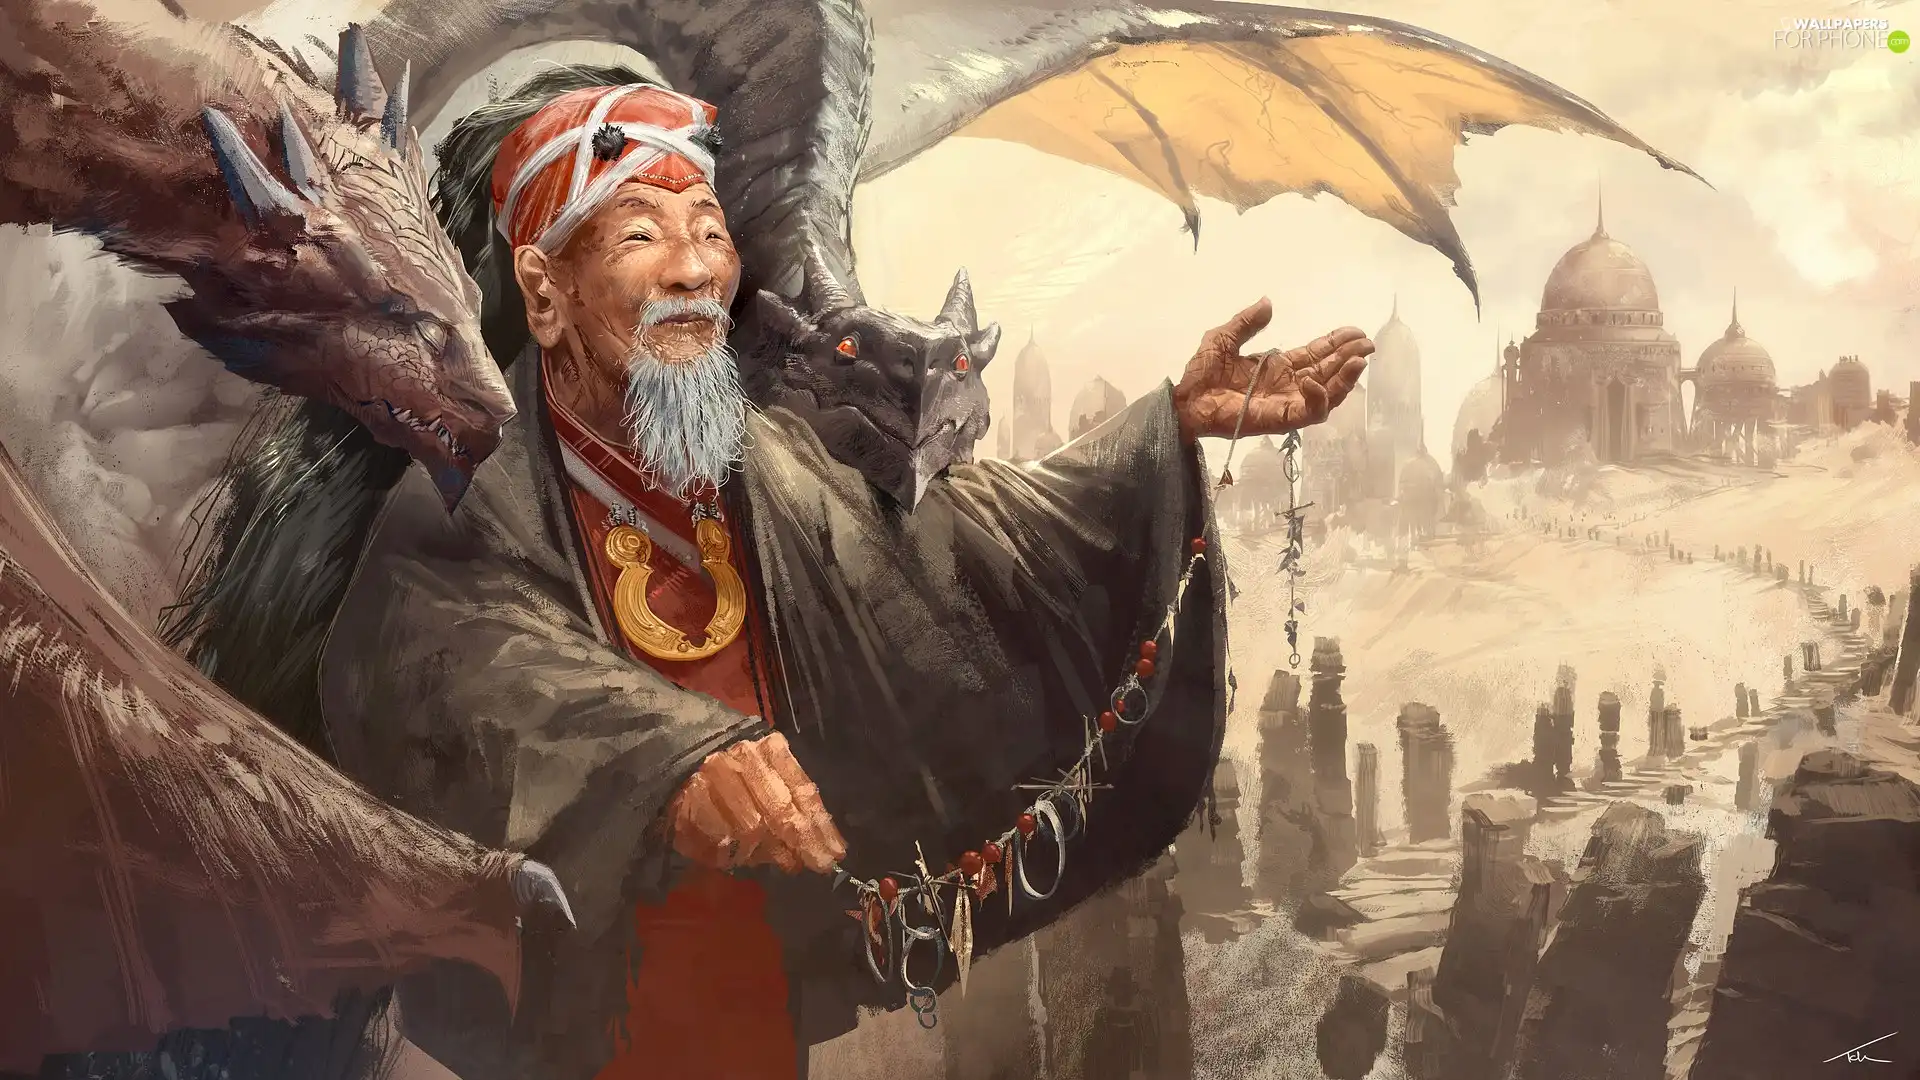 Dragons, fantasy, a man